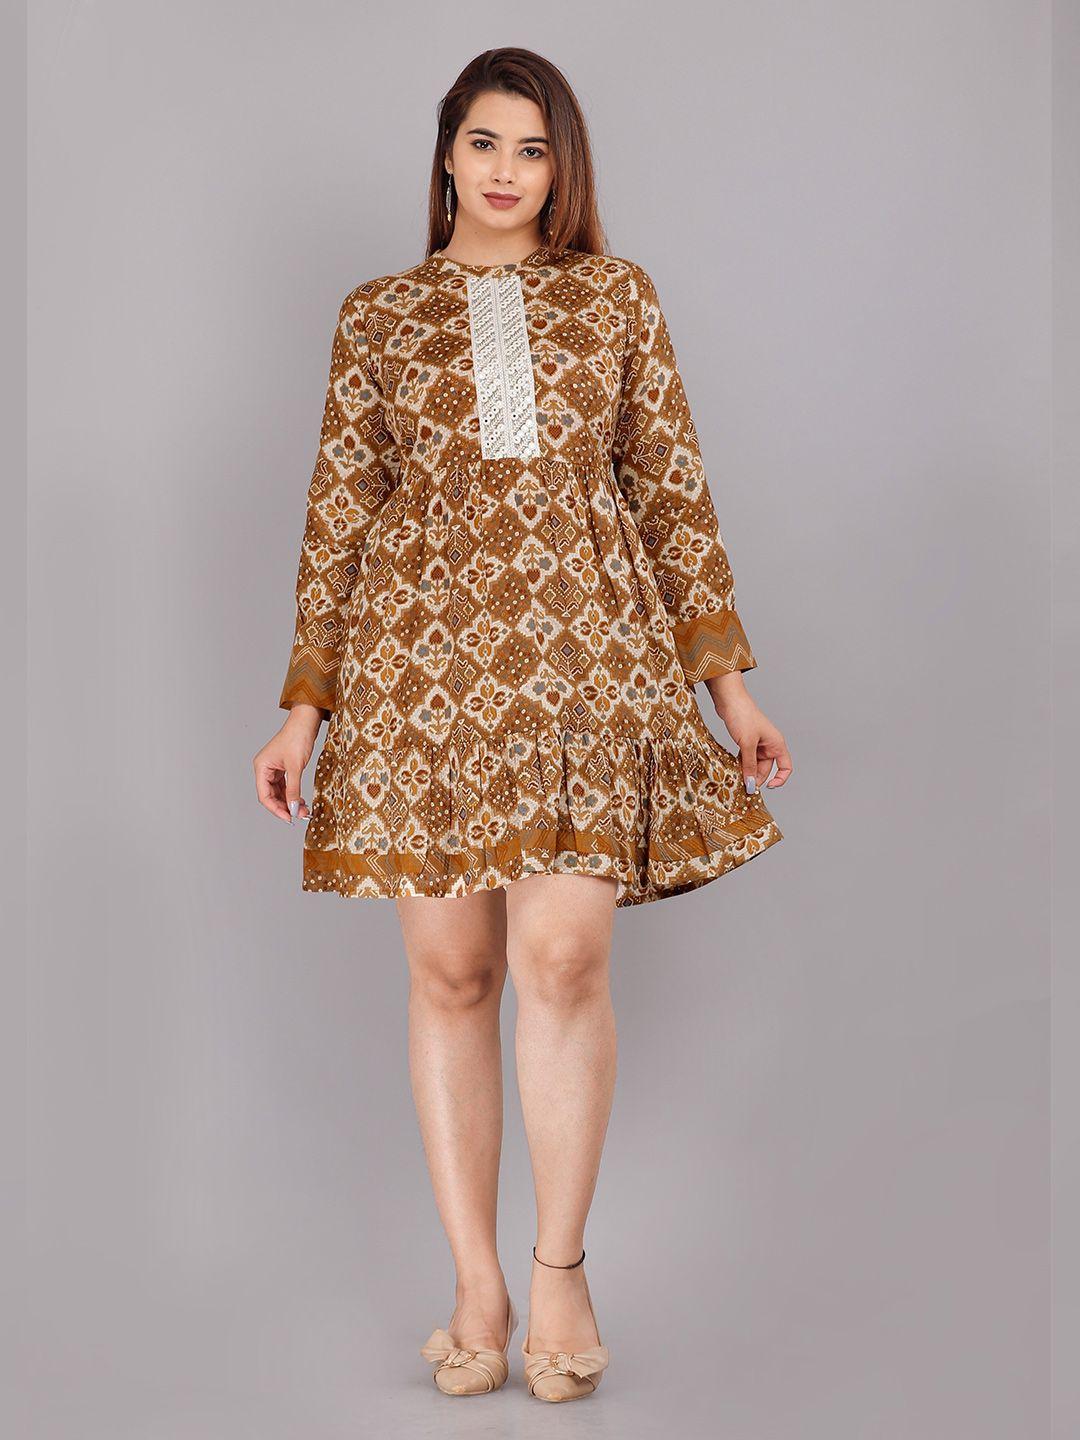 kalini brown and white ethnic motifs print cotton cambric round neck ethnic dress